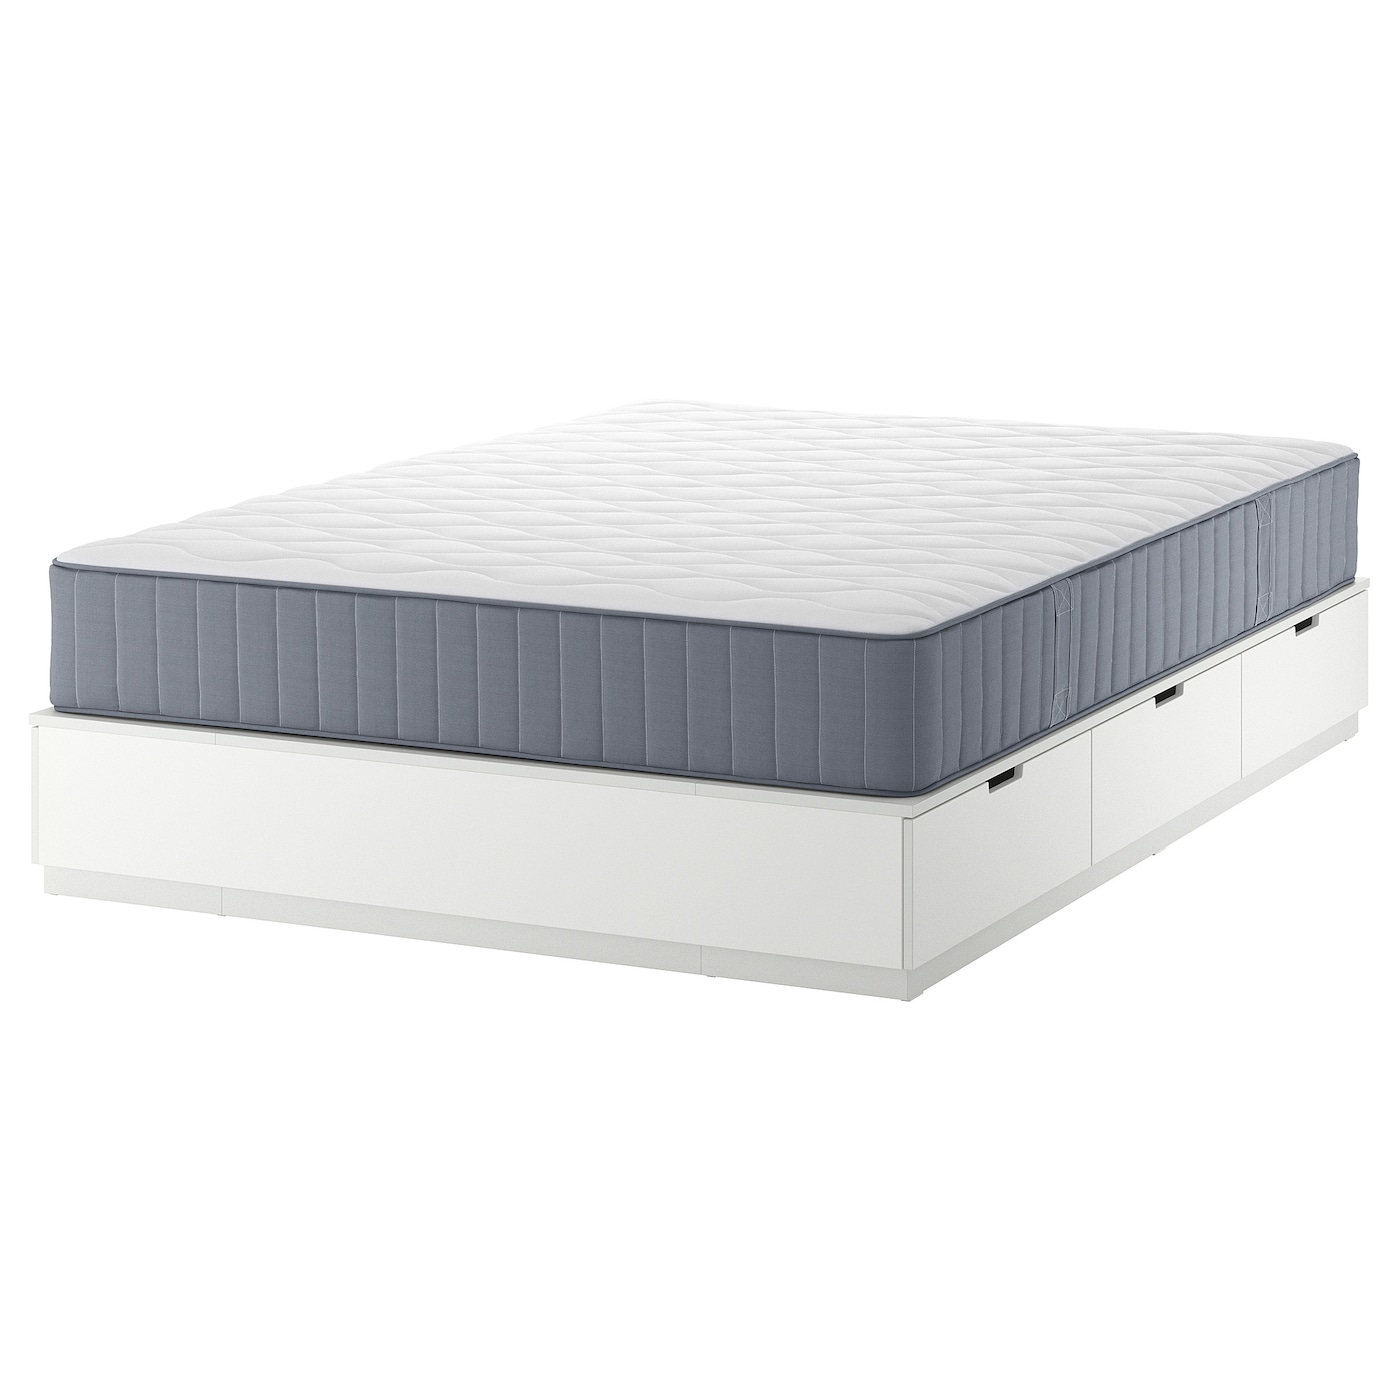 Каркас кровати с контейнером и матрасом - IKEA NORDLI, 200х160 см, матрас средне-жесткий, белый, НОРДЛИ ИКЕА